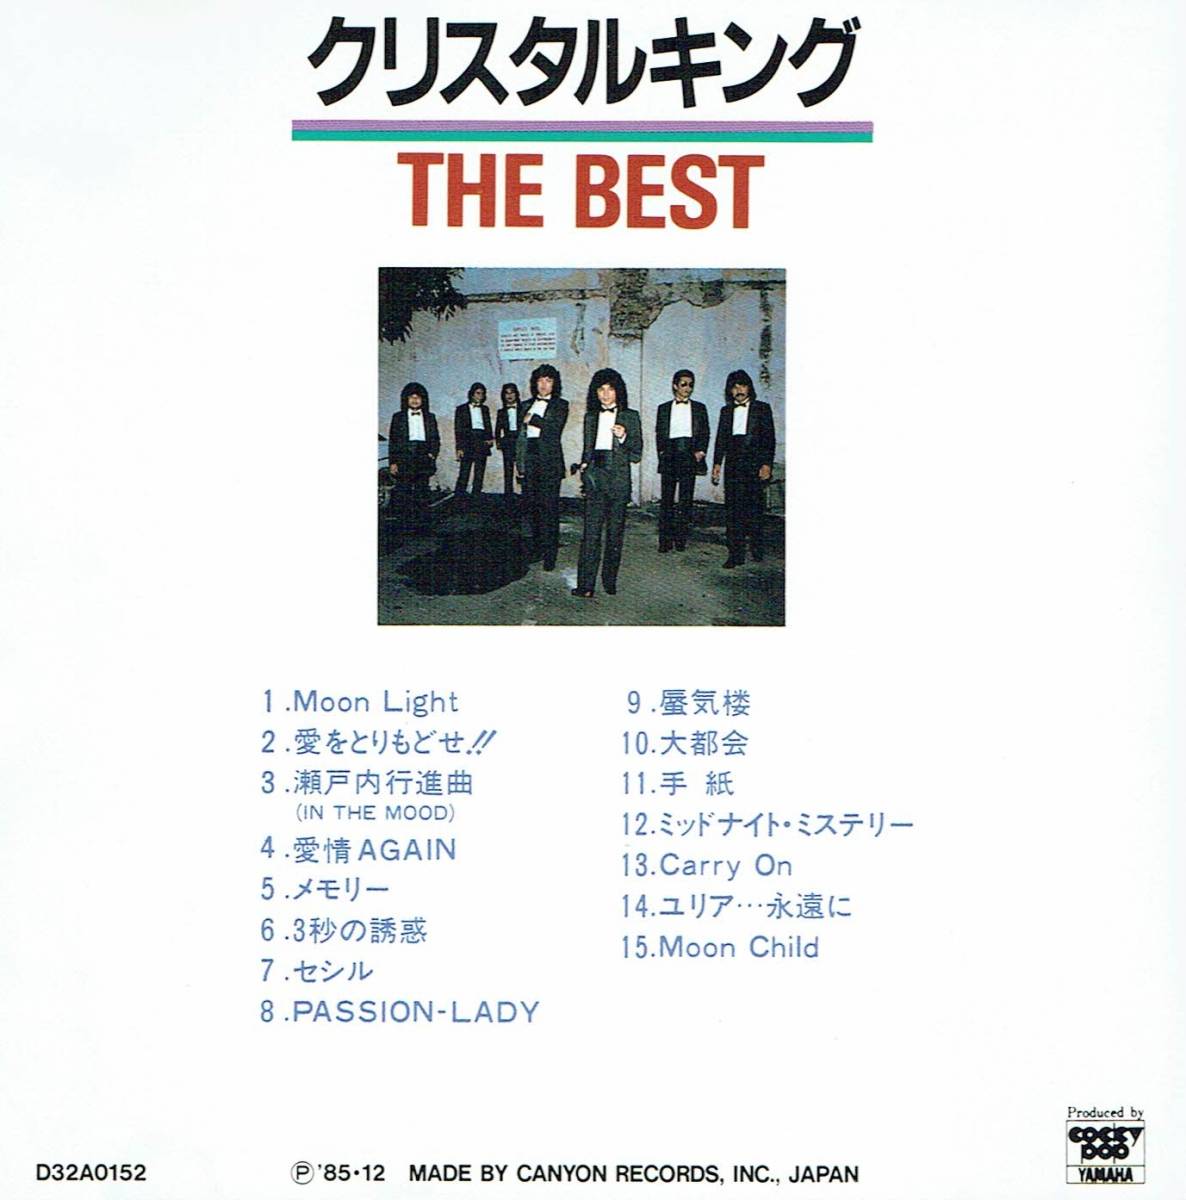 CD Crystal King THE BEST лучший альбом большой столица . love ......!! лилия a***... Ken, the Great Bear Fist 